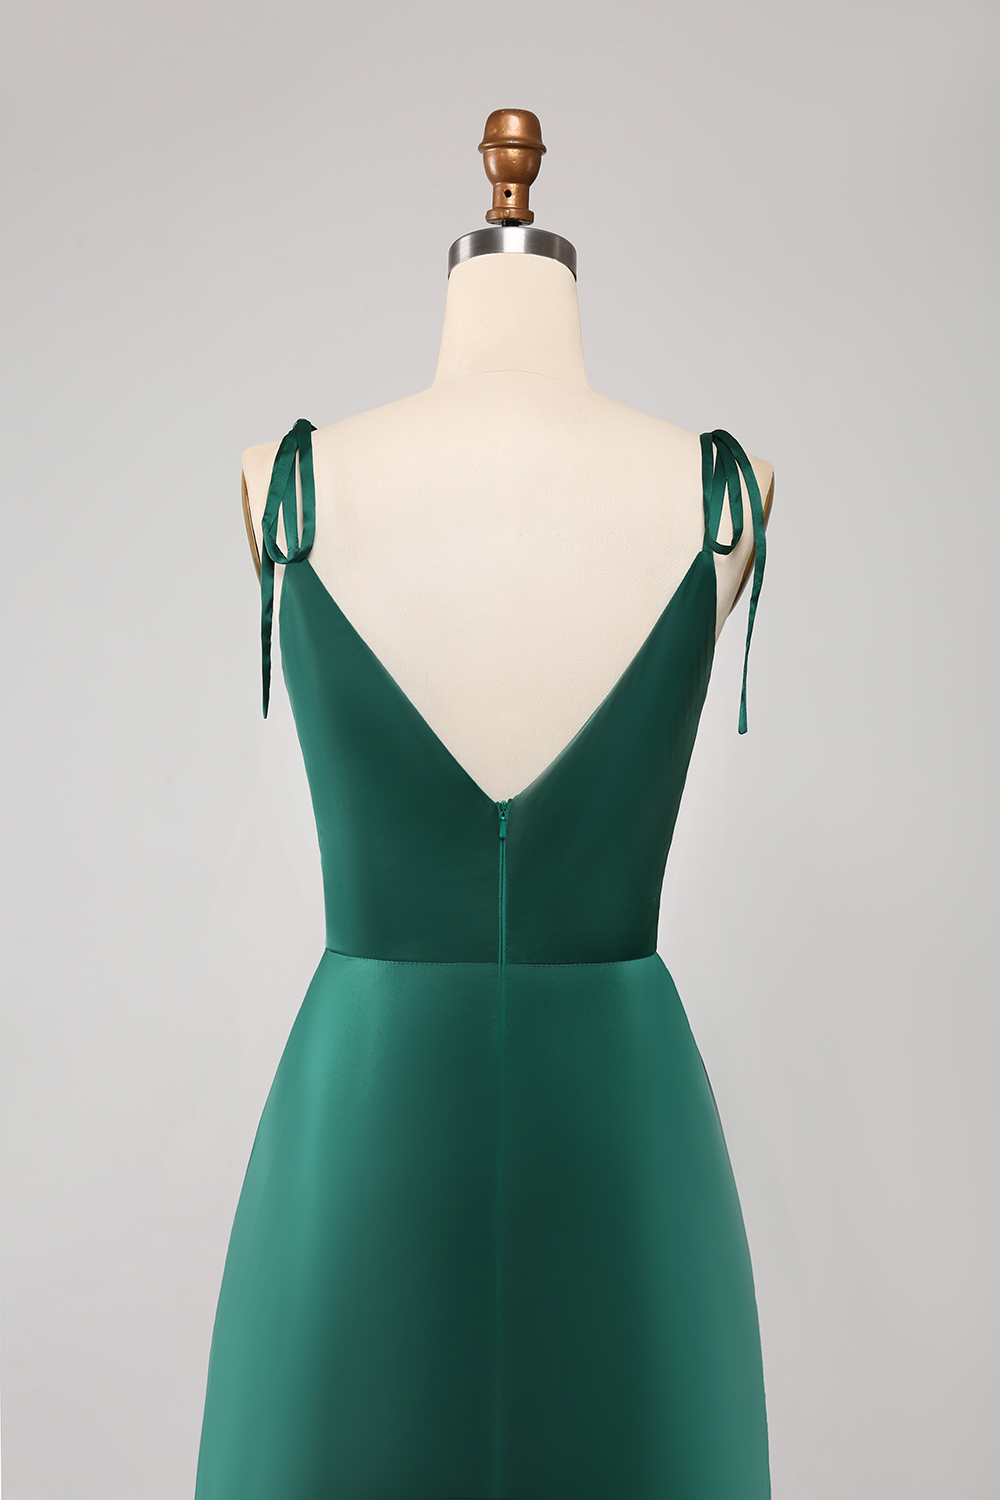 A-Line Dark Green Spaghetti Straps Satin Long Bridesmaid Dress With Slit